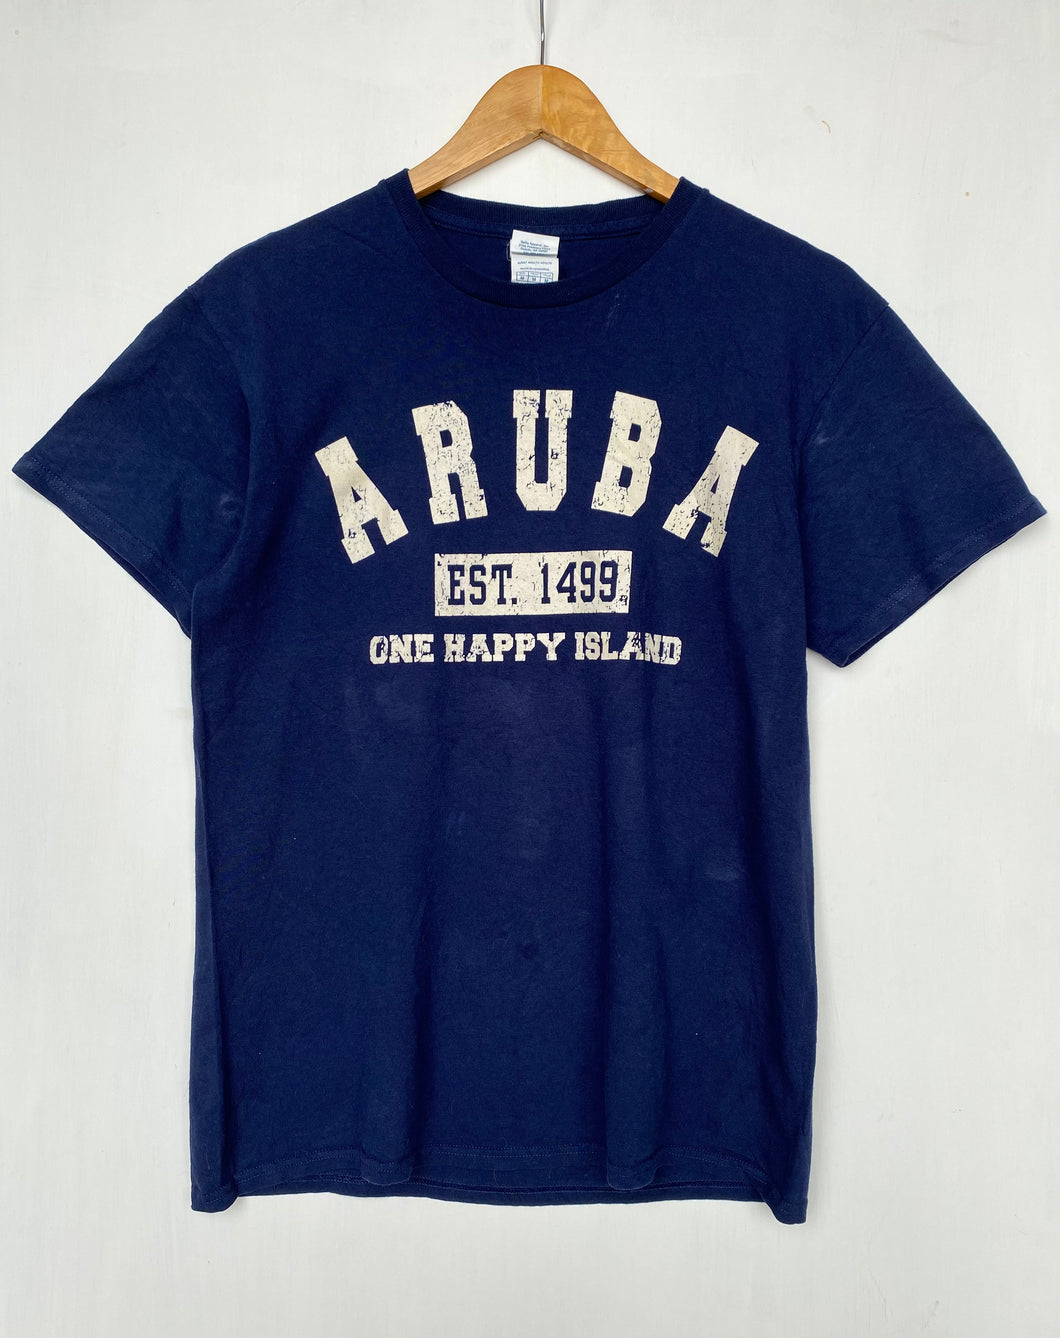 Printed ‘Aruba’ t-shirt (M)